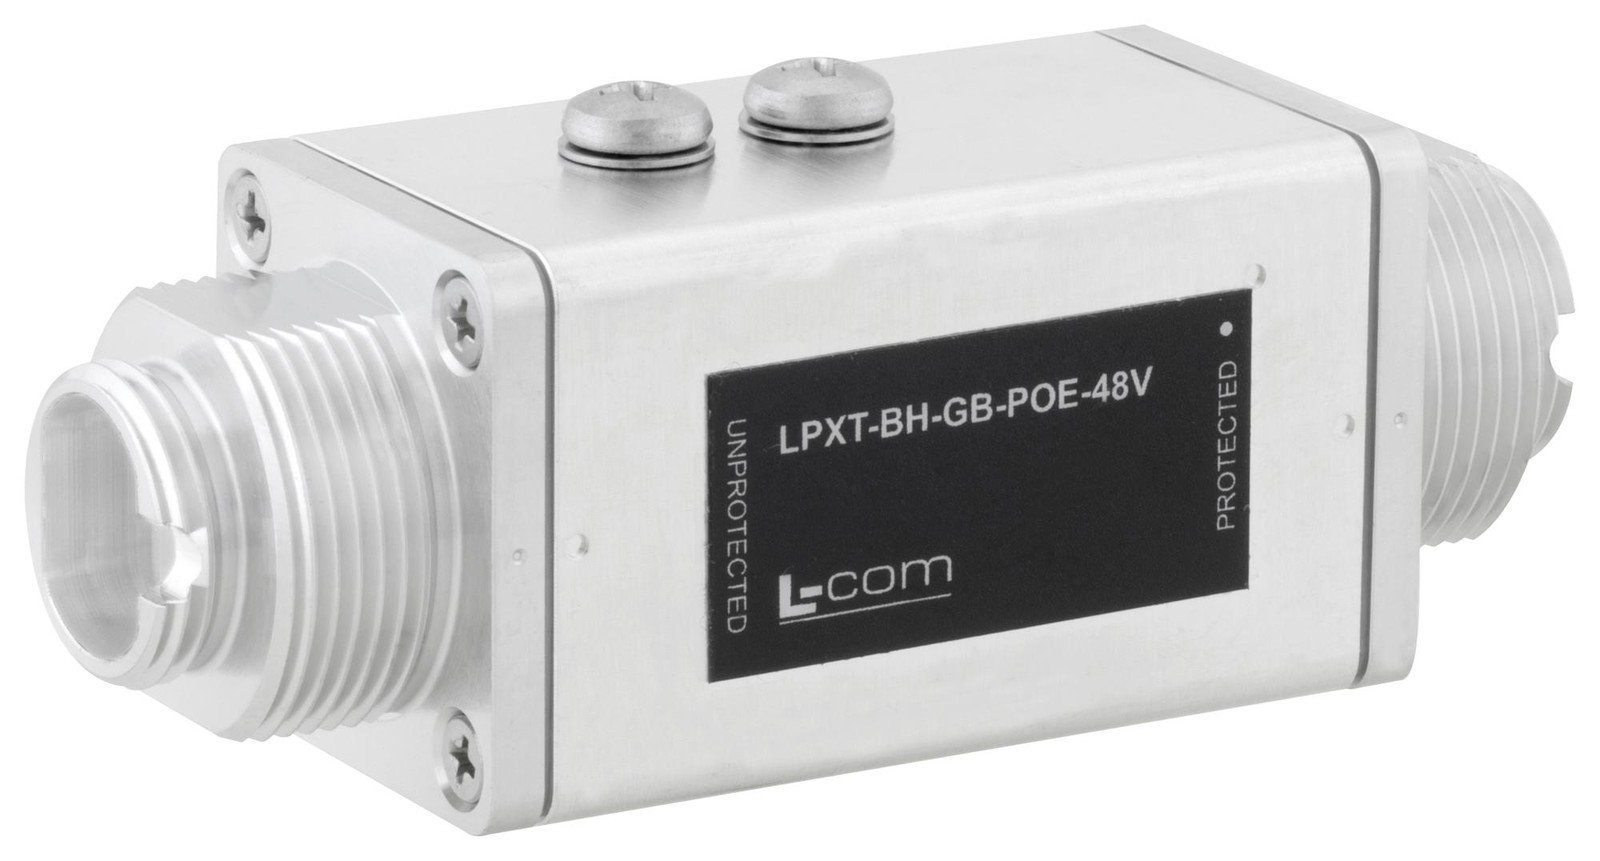 L-Com Lpxt-Bh-Gb-Poe-48V Enet Surge Protector, 1Port, Panel